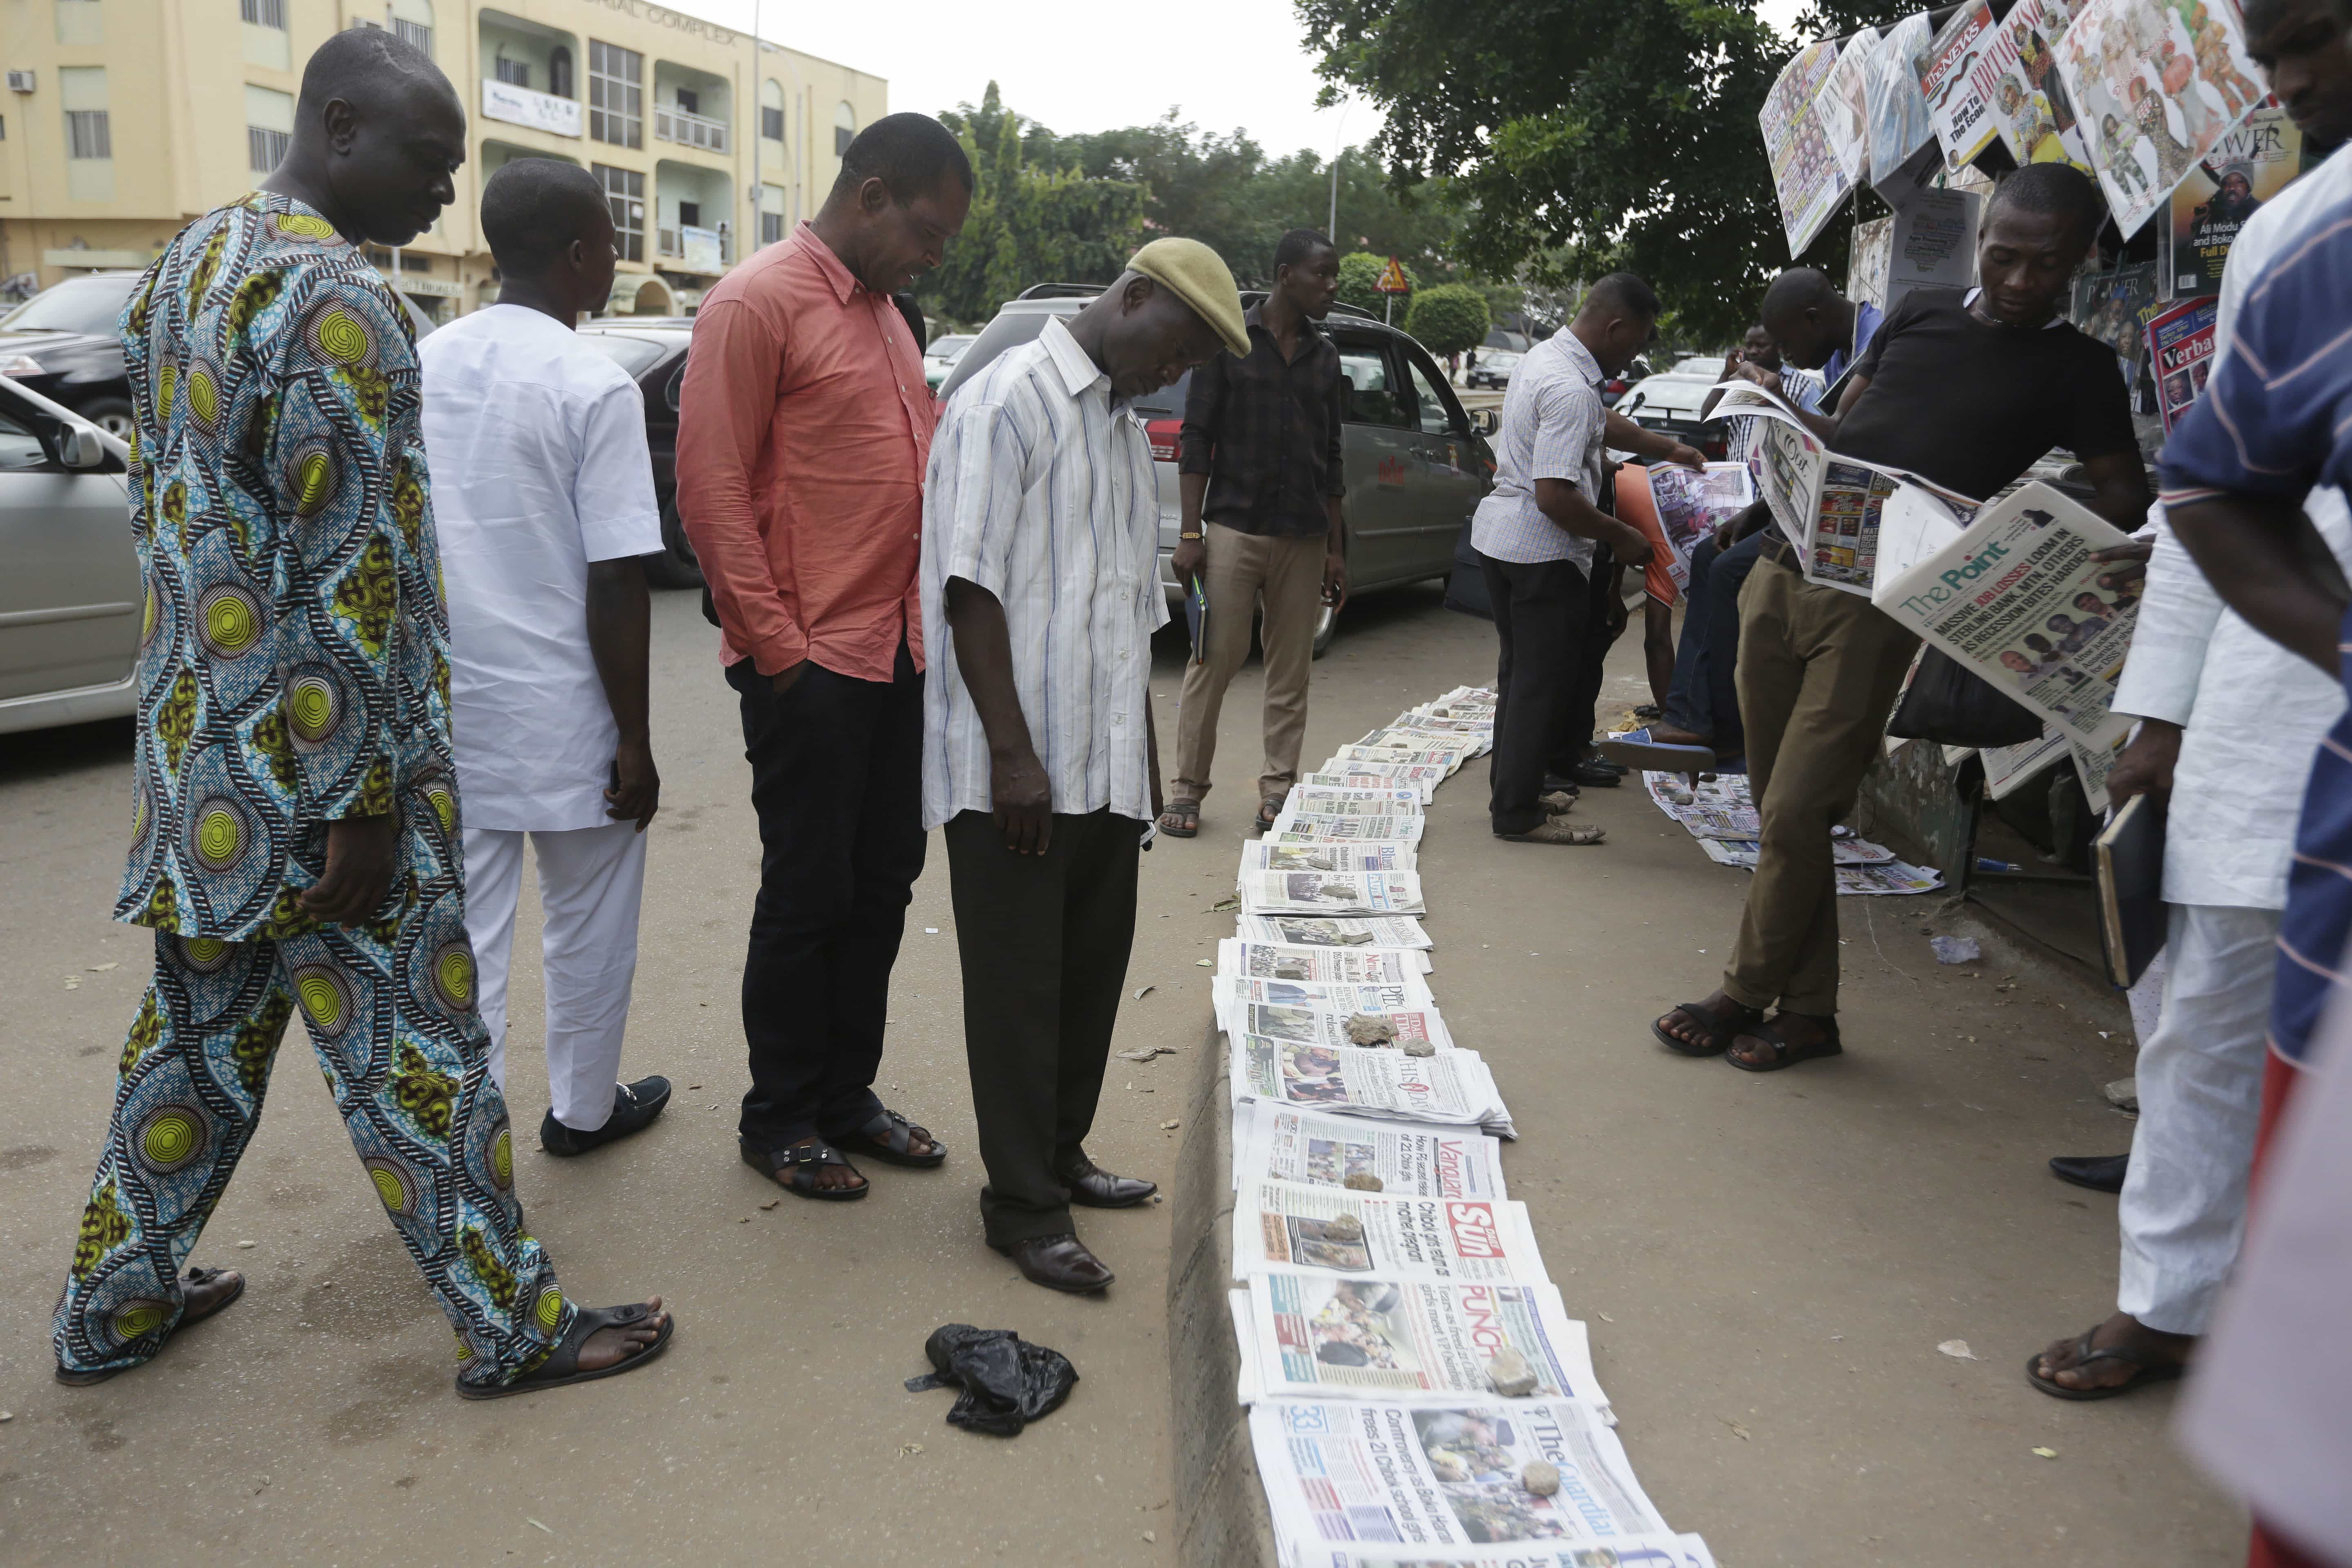 People read newspapers, in Abuja, Nigeria, 14 October 2016, AP Photo/Sunday Alamba